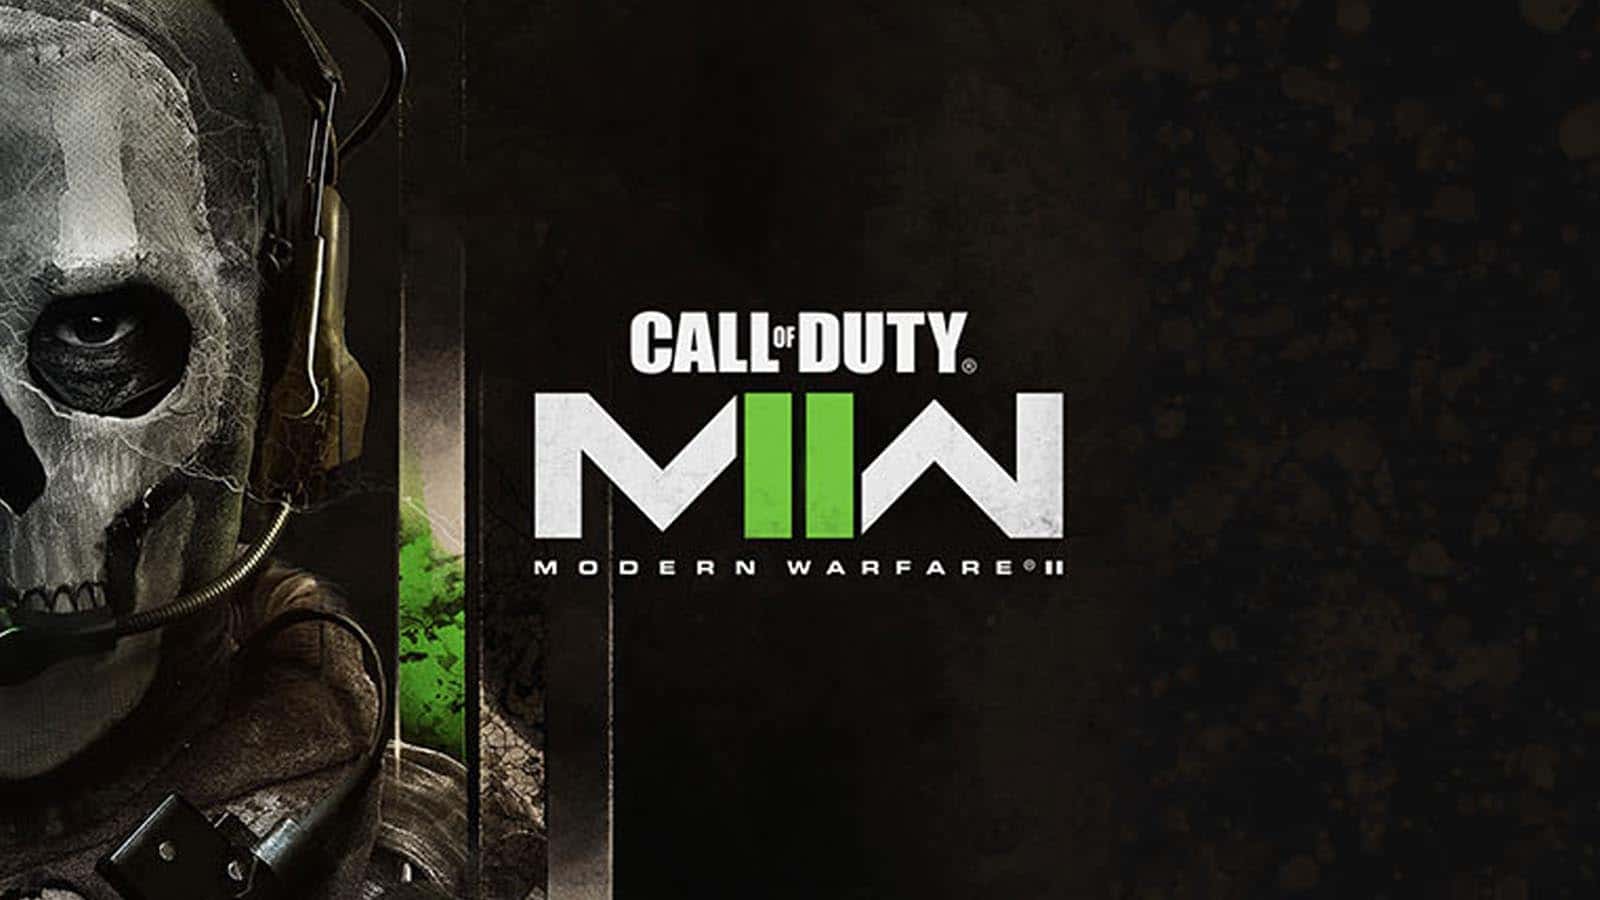 Call of Duty: Modern Warfare 2 PC Game HD Version Full Download